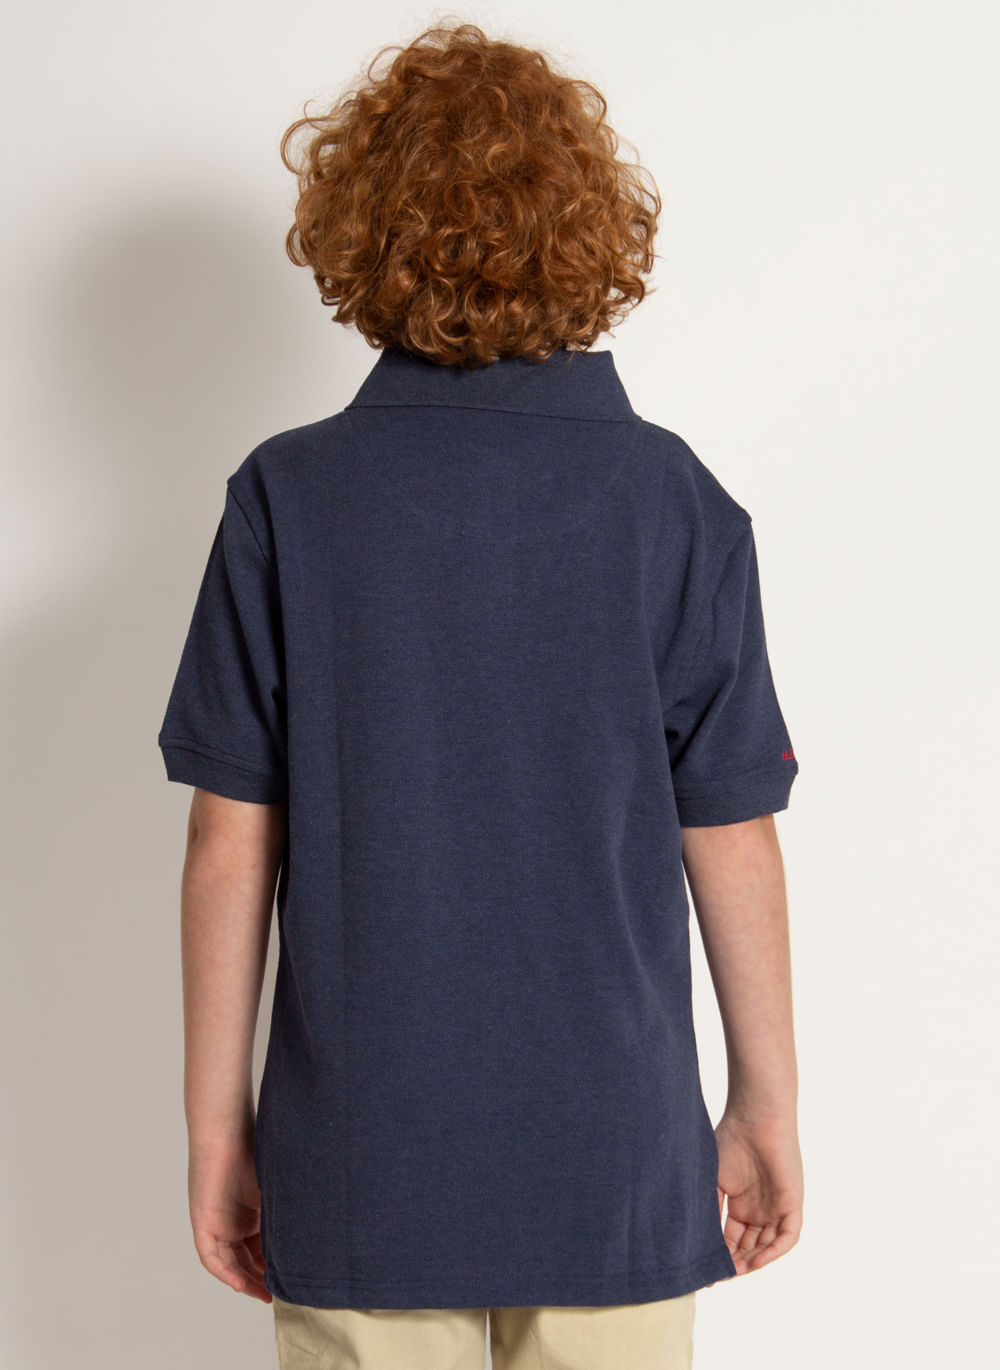 camisa-polo-aleatory-infantil-lisa-azul-mescla-azul-marinho-modelo-2020-2-